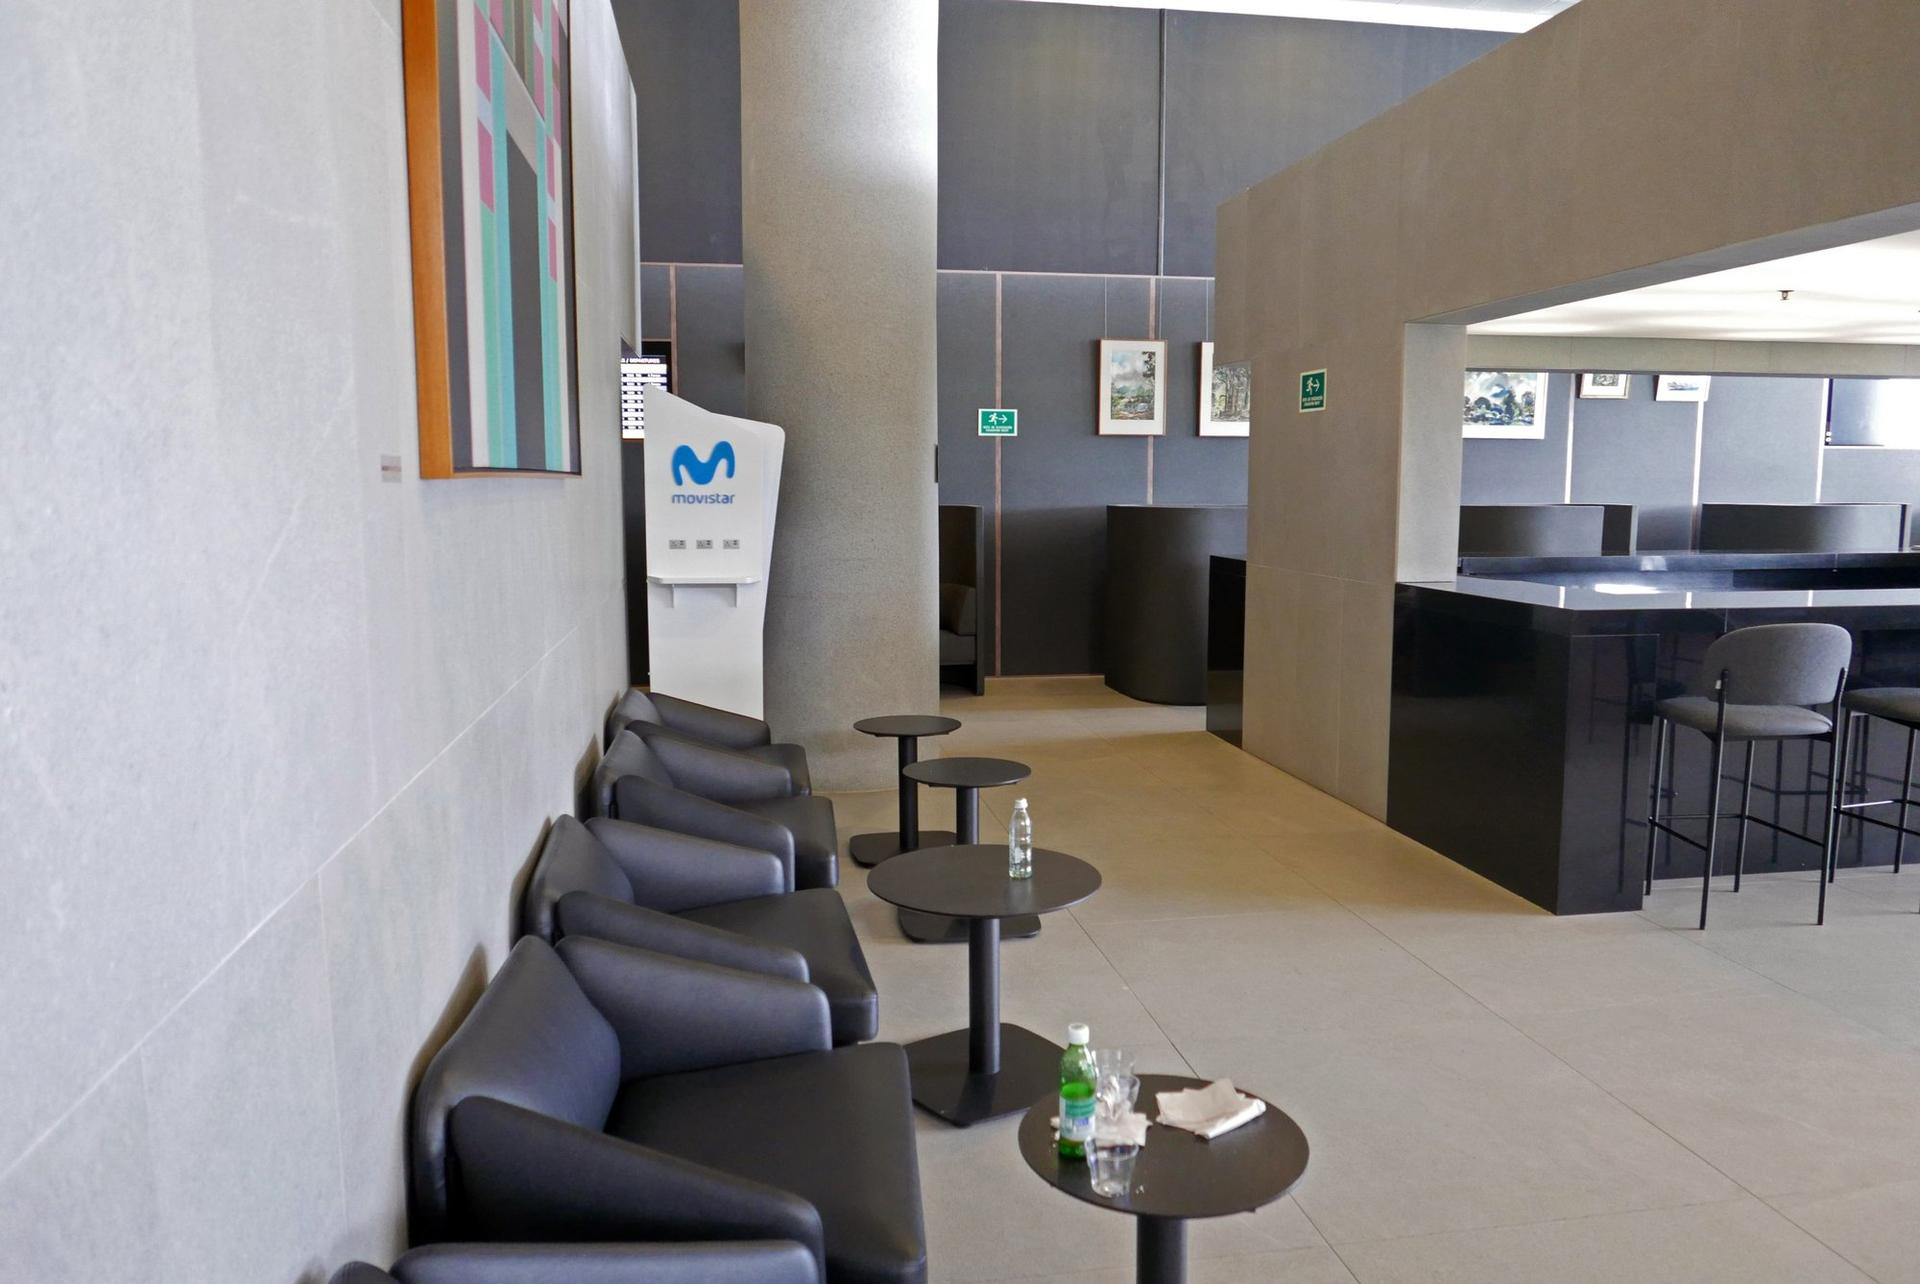 Avianca Lounge Bogota (Domestic) image 2 of 25